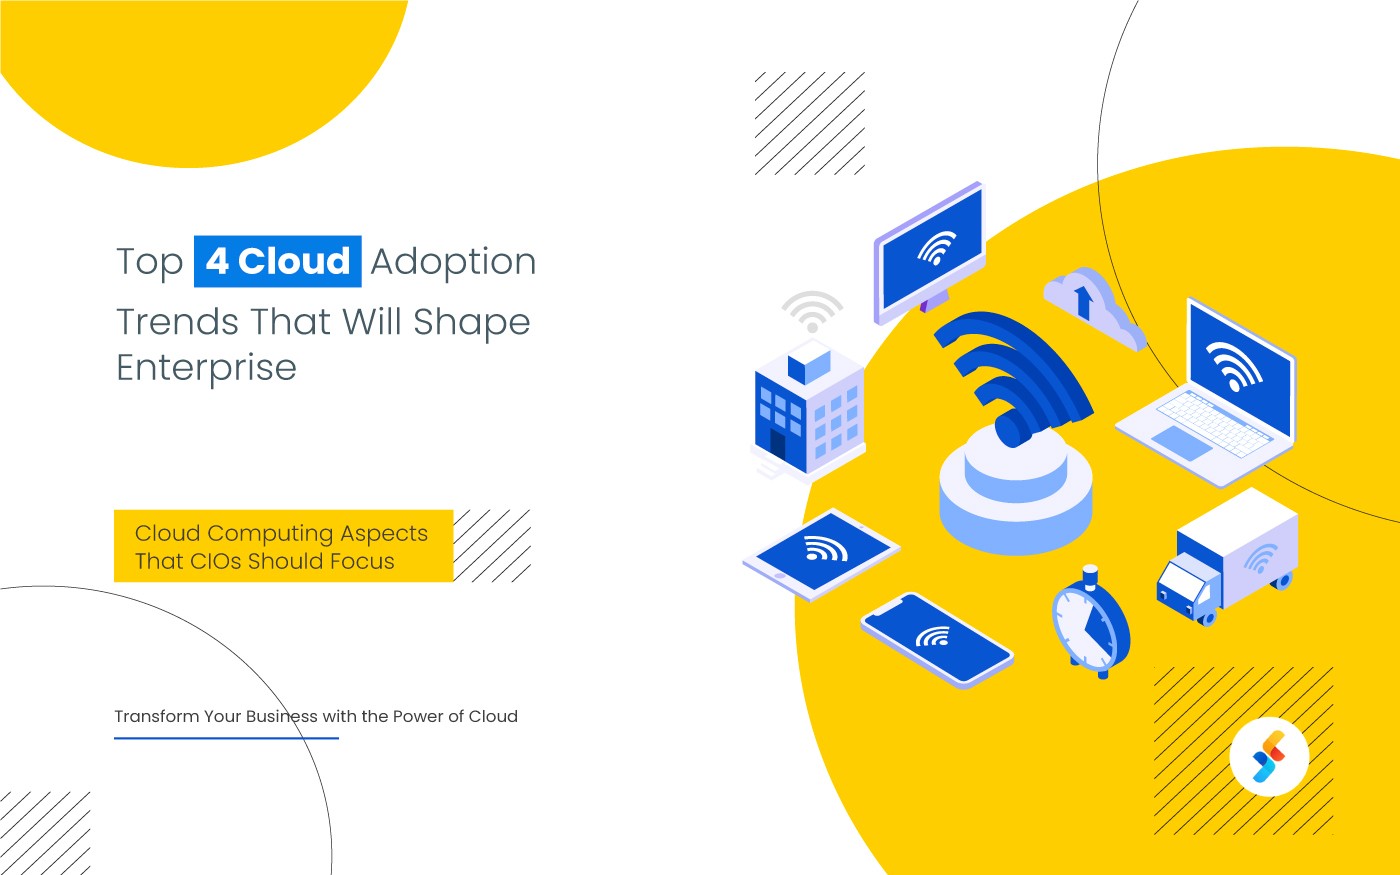 Top 4 Cloud Adoption Trends That Will Shape Enterprise